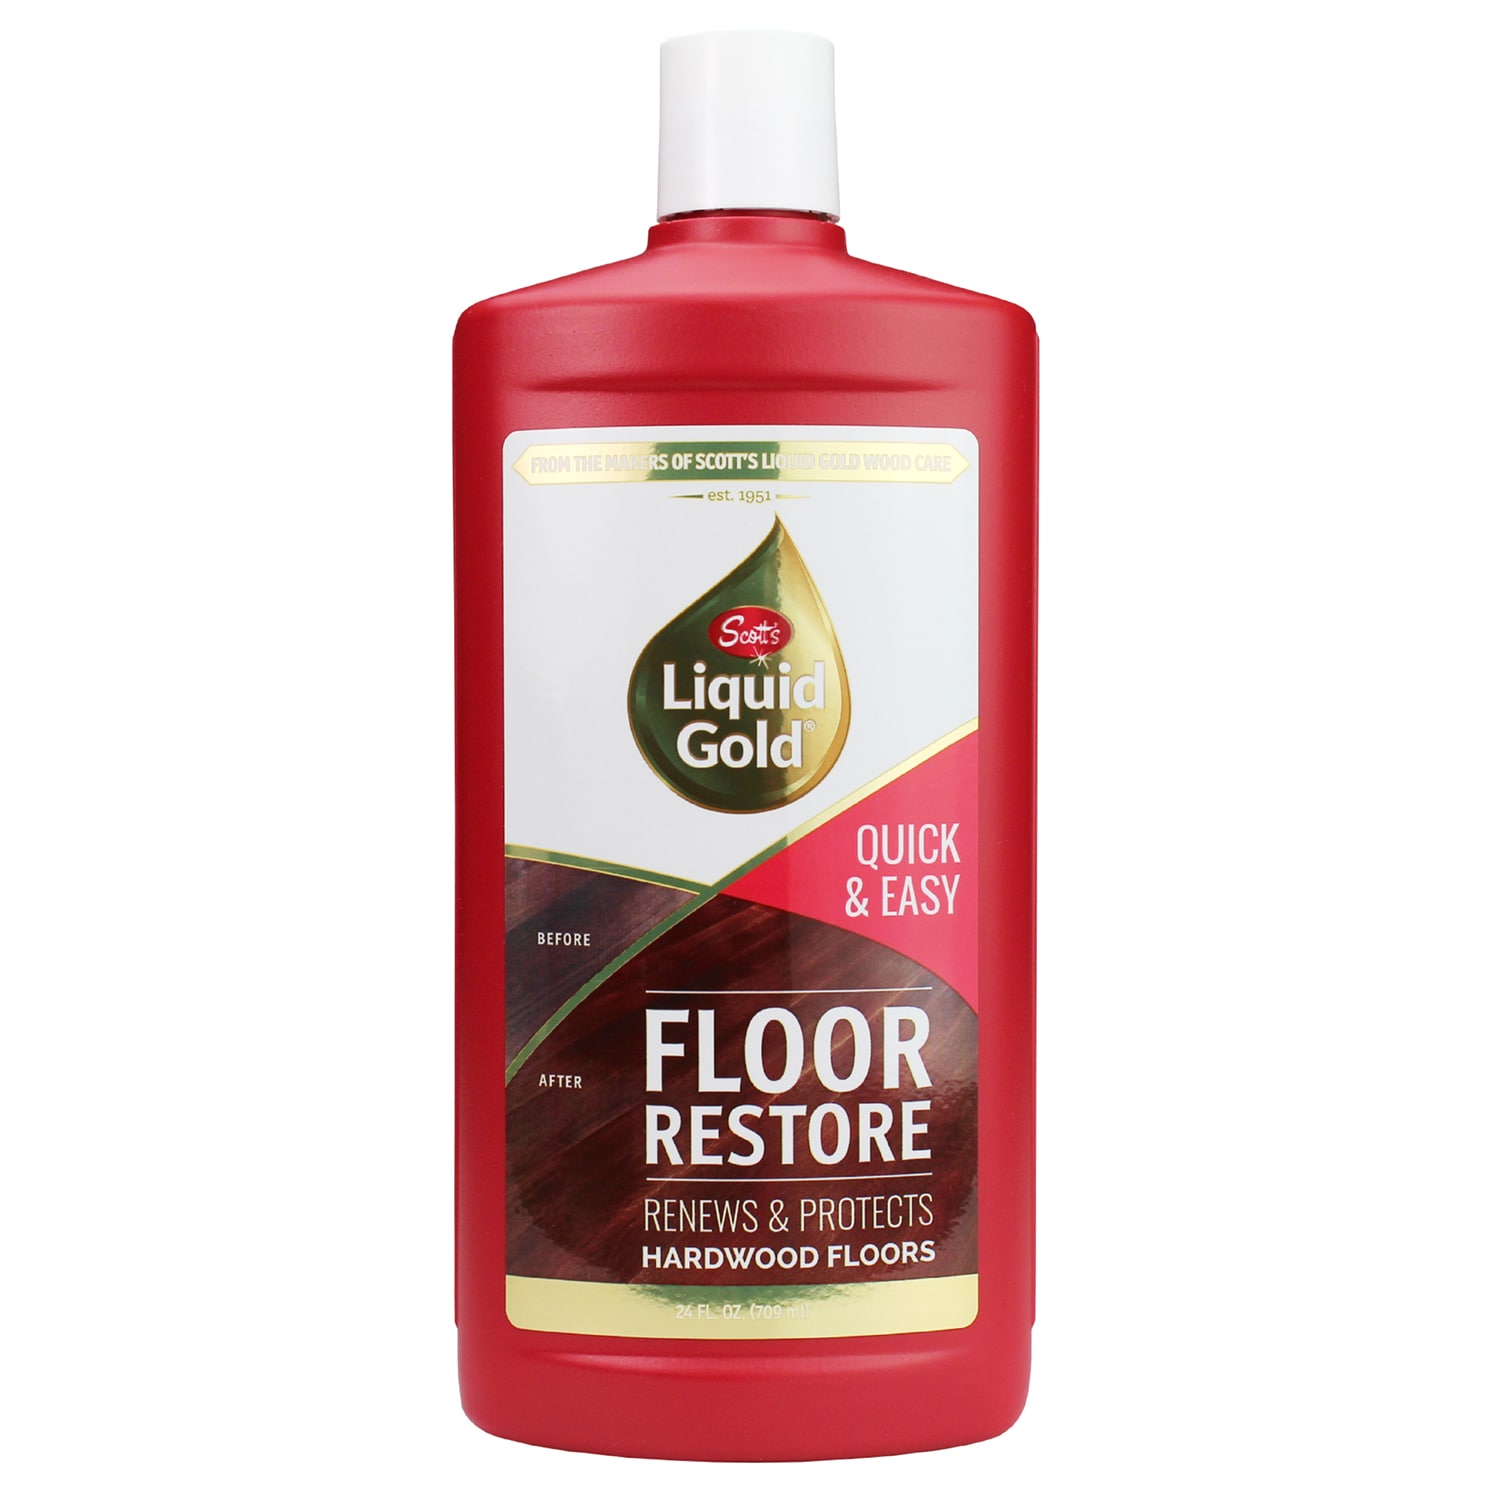 Johnson 16-oz Semi-gloss Floor Polish at